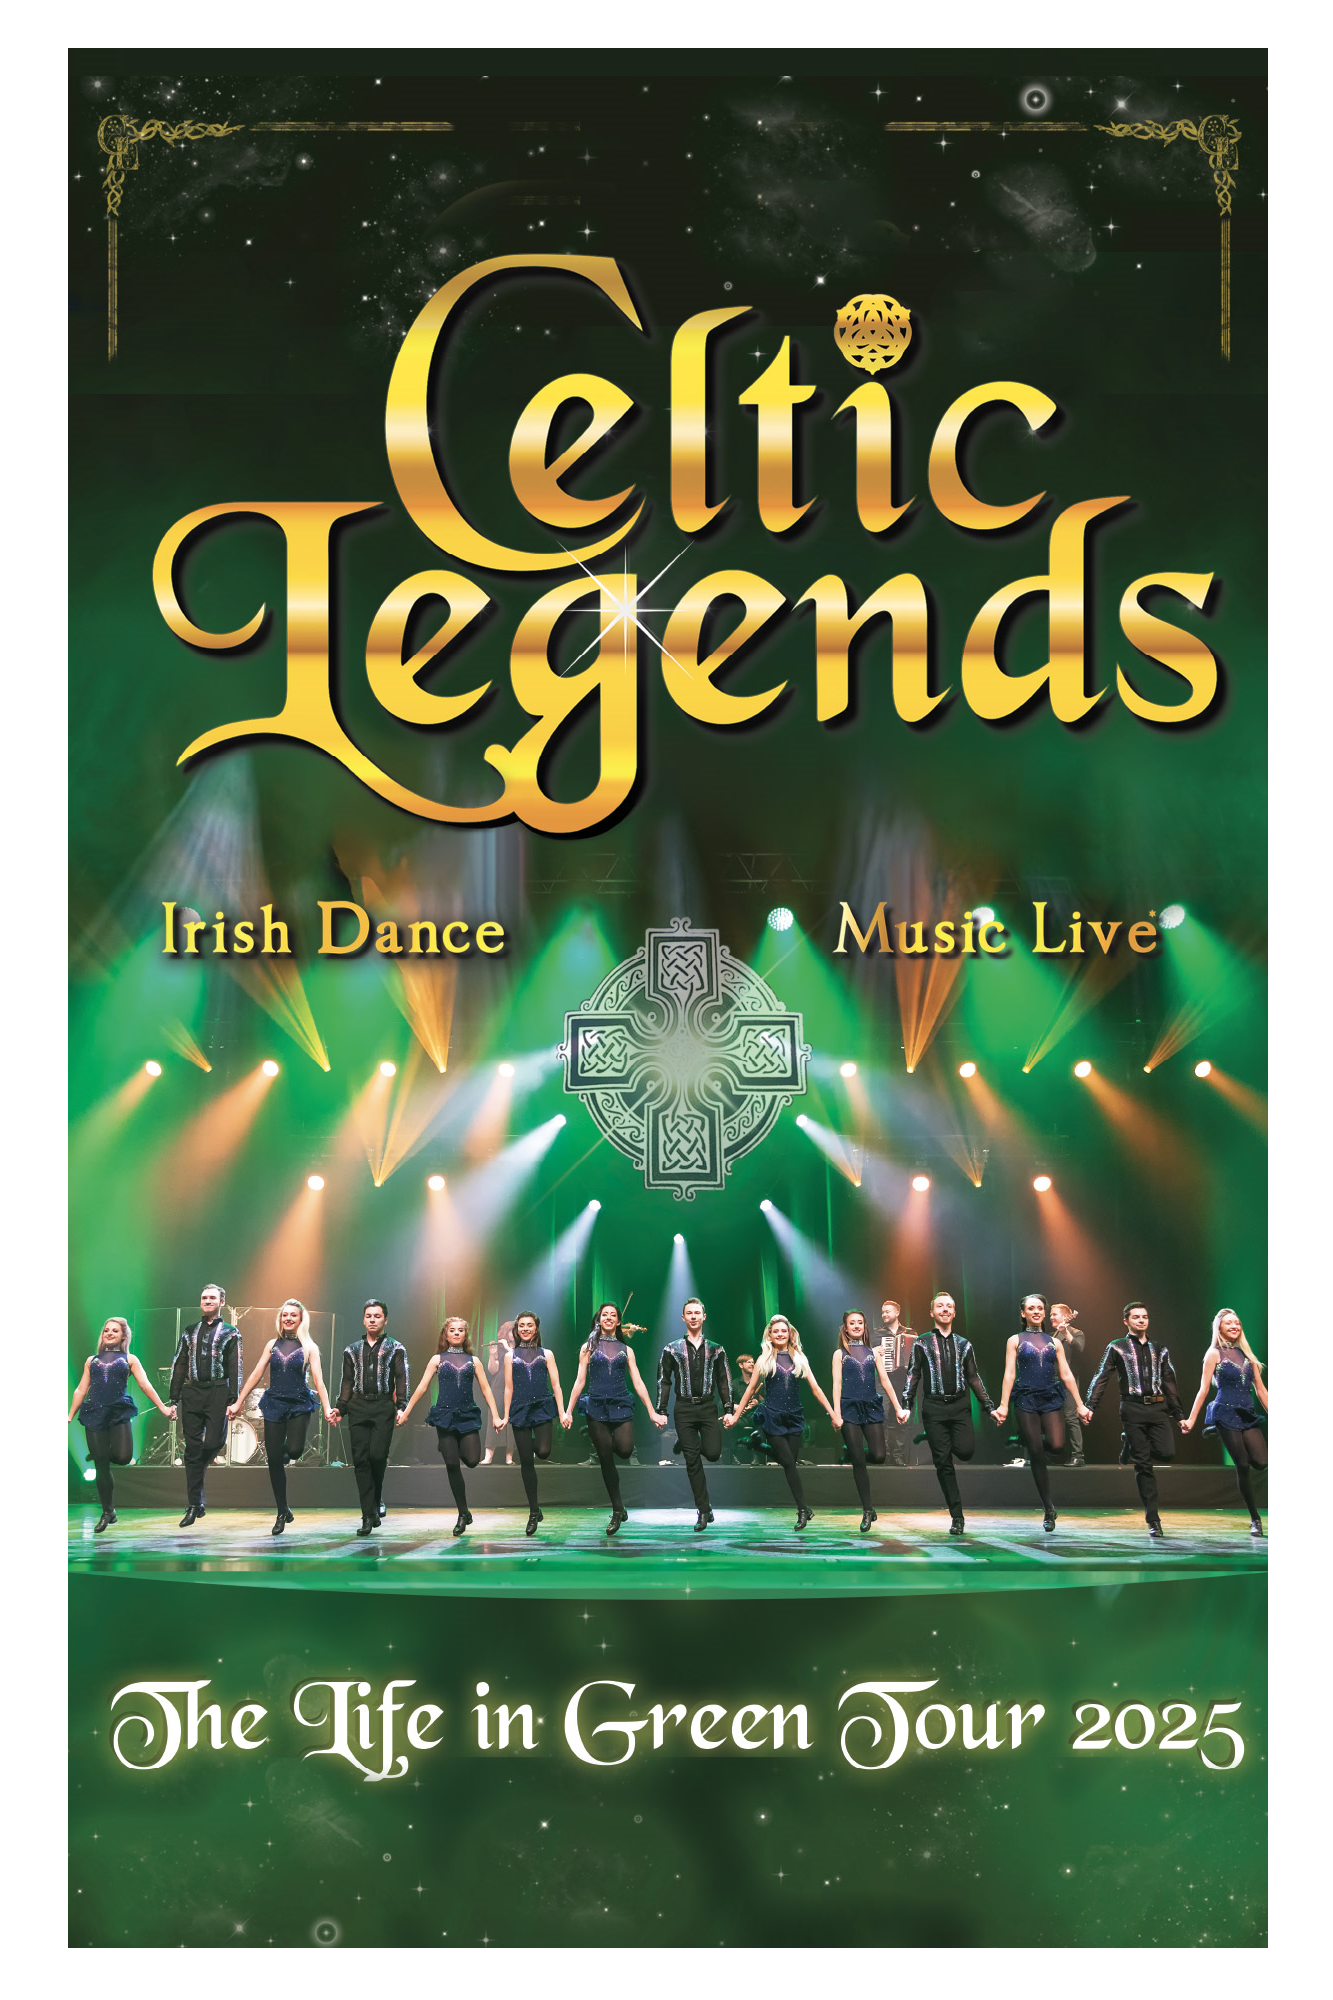 Celtic Legends : The Life in Green Tour 2025 | Zénith d'Auvergne